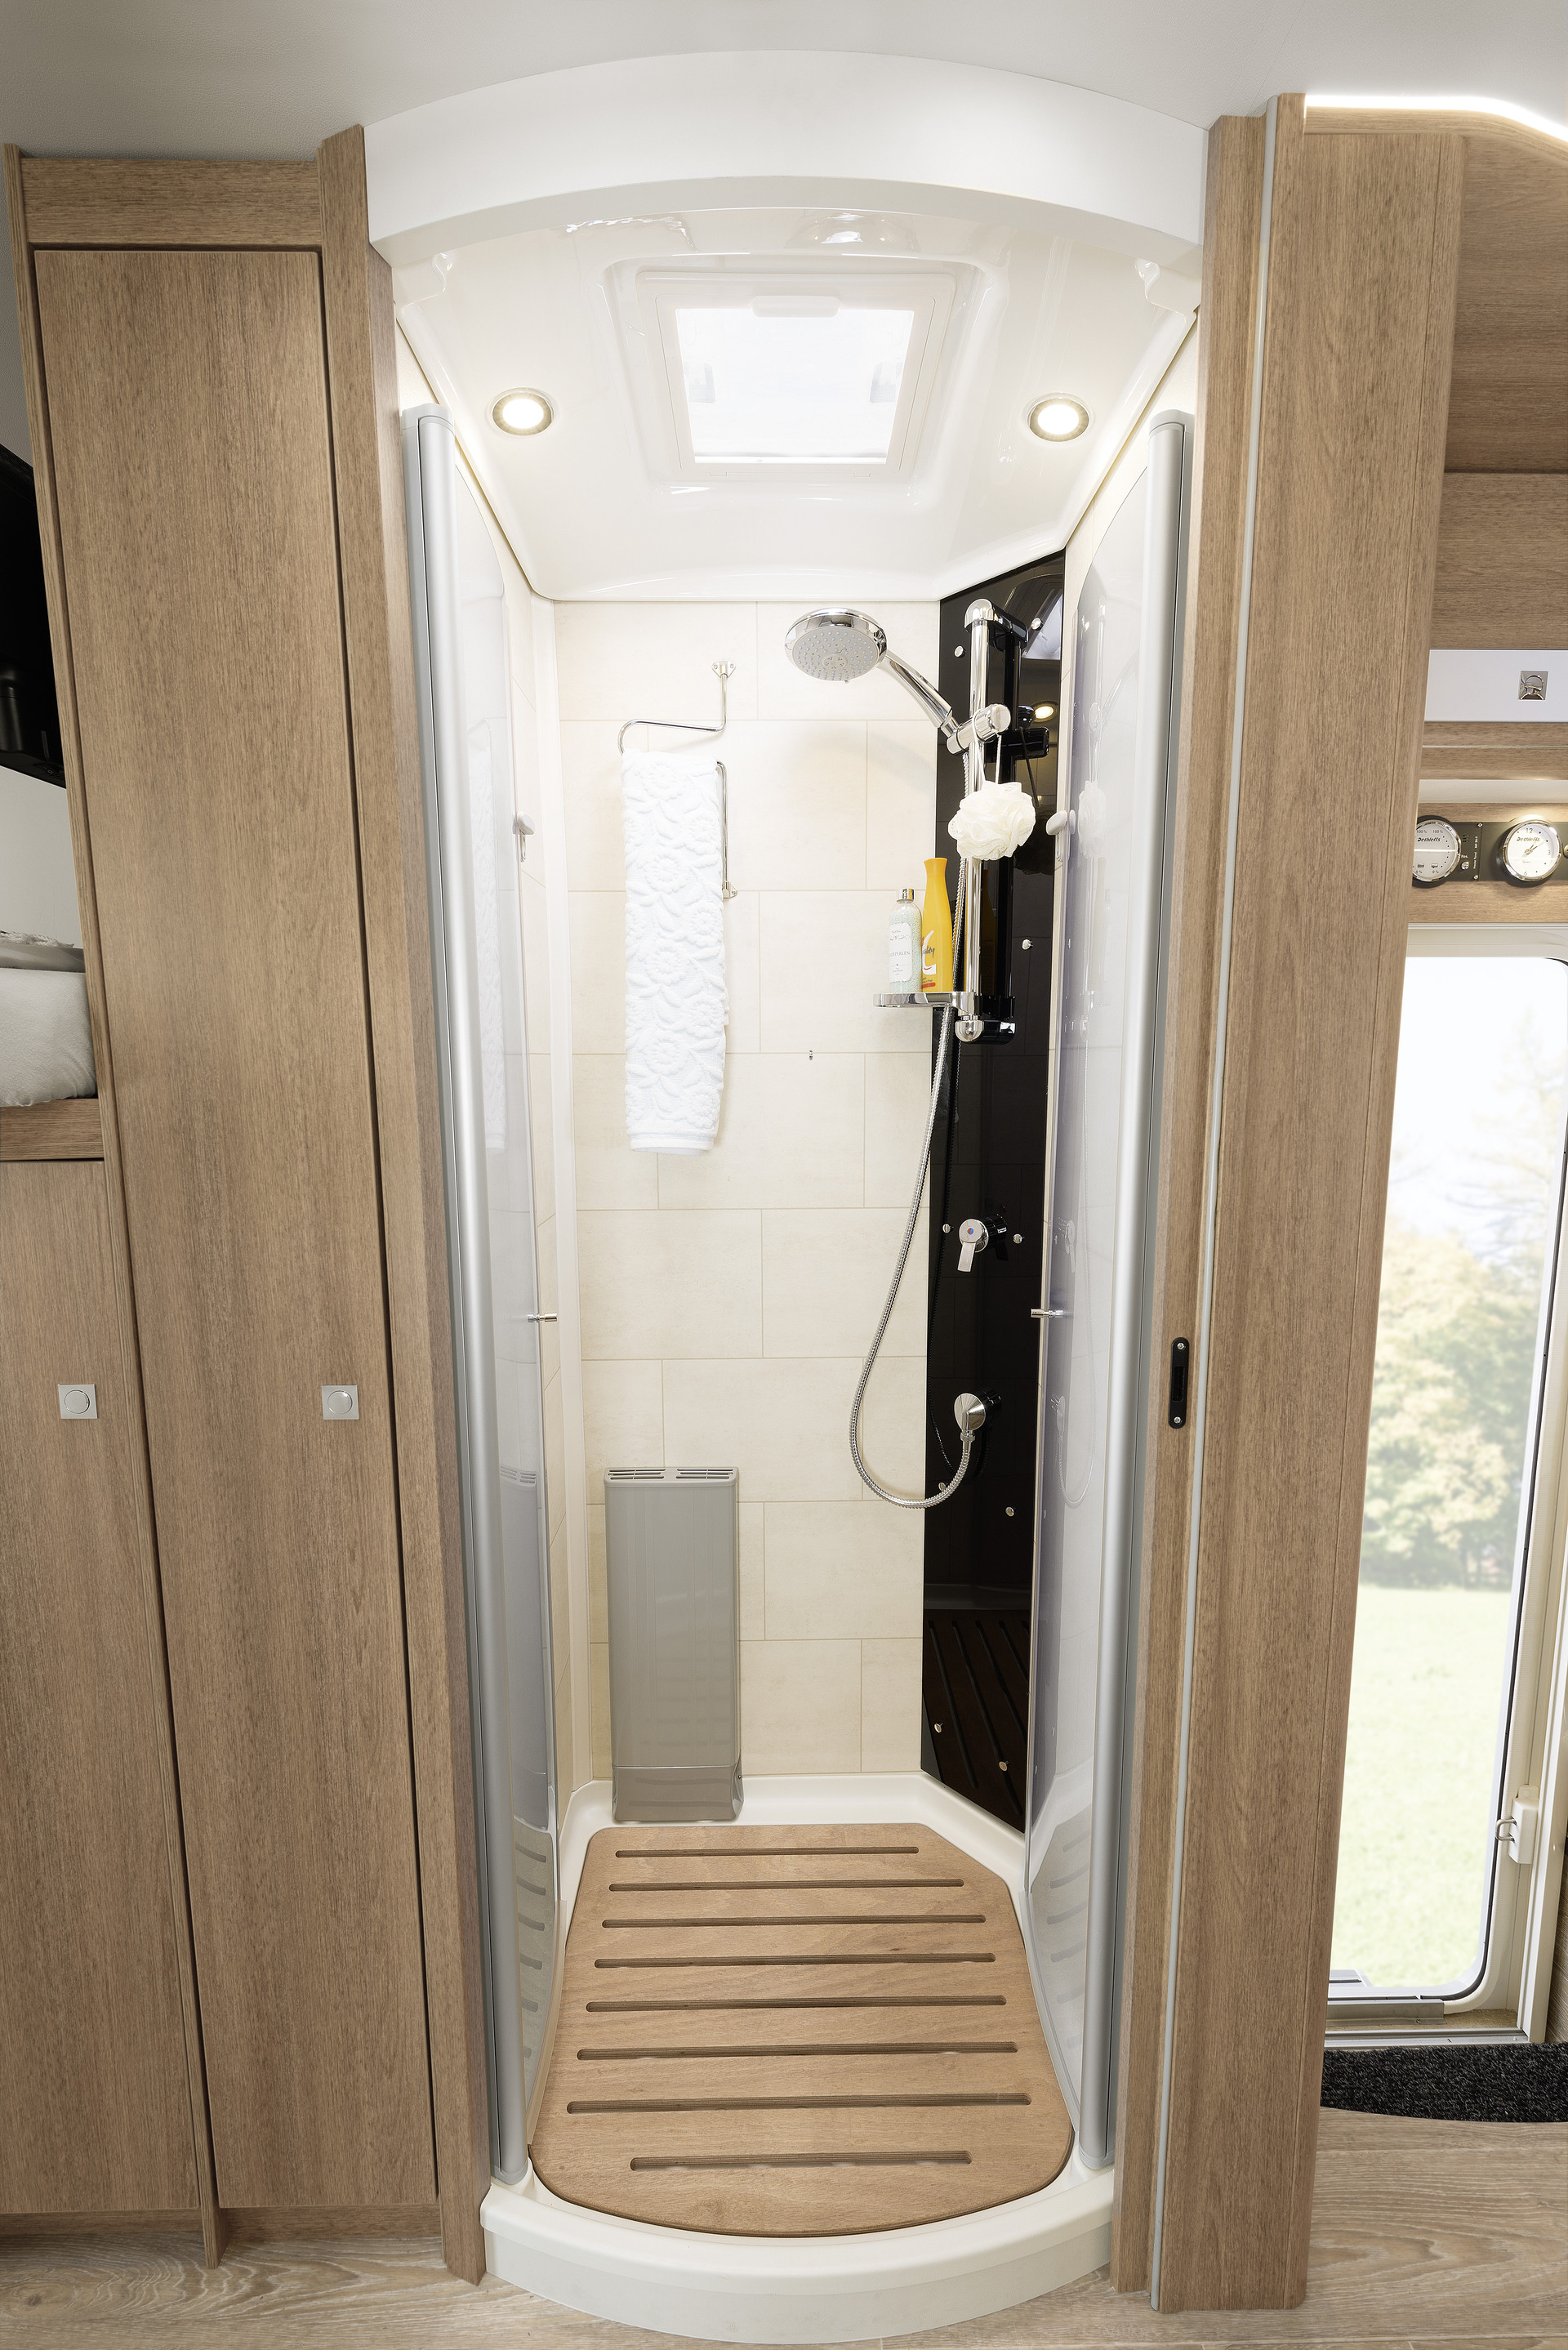 The separate shower cubicle with Plexiglas doors promises plenty of elbow room